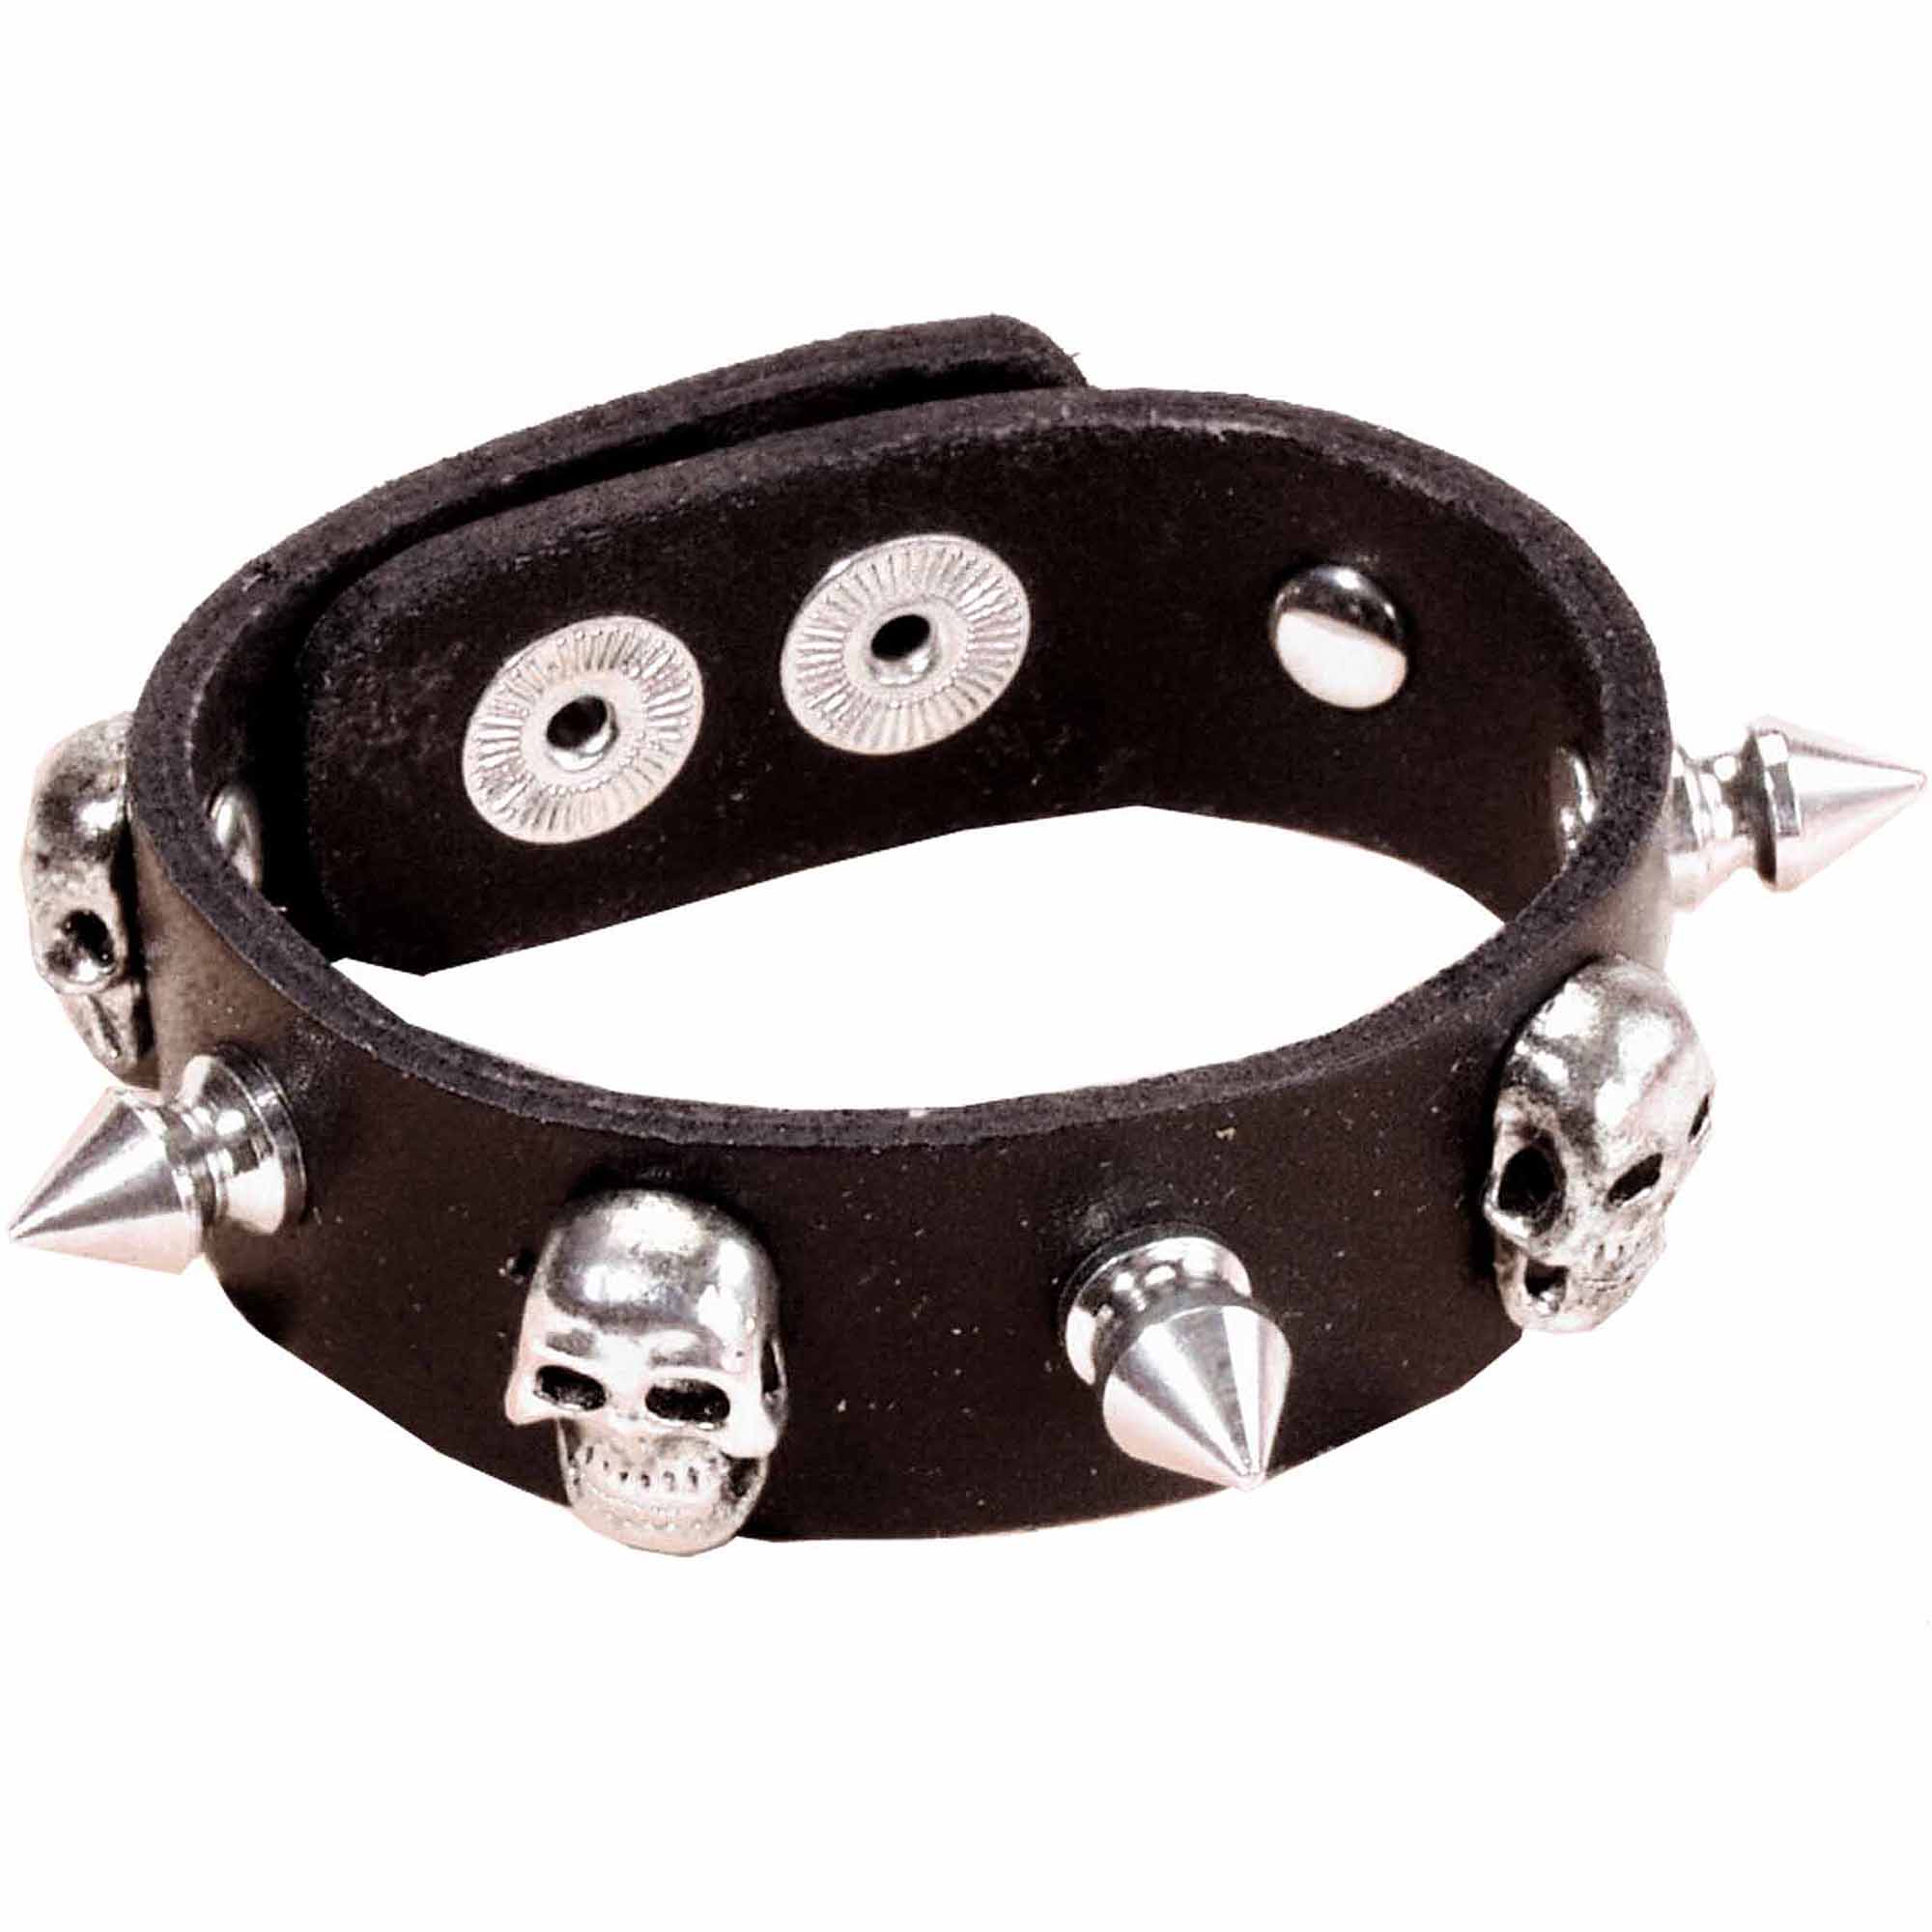 Loftus Men Spike & Skulls Punk Leather Snap Bracelet, Black, One Size - image 1 of 1